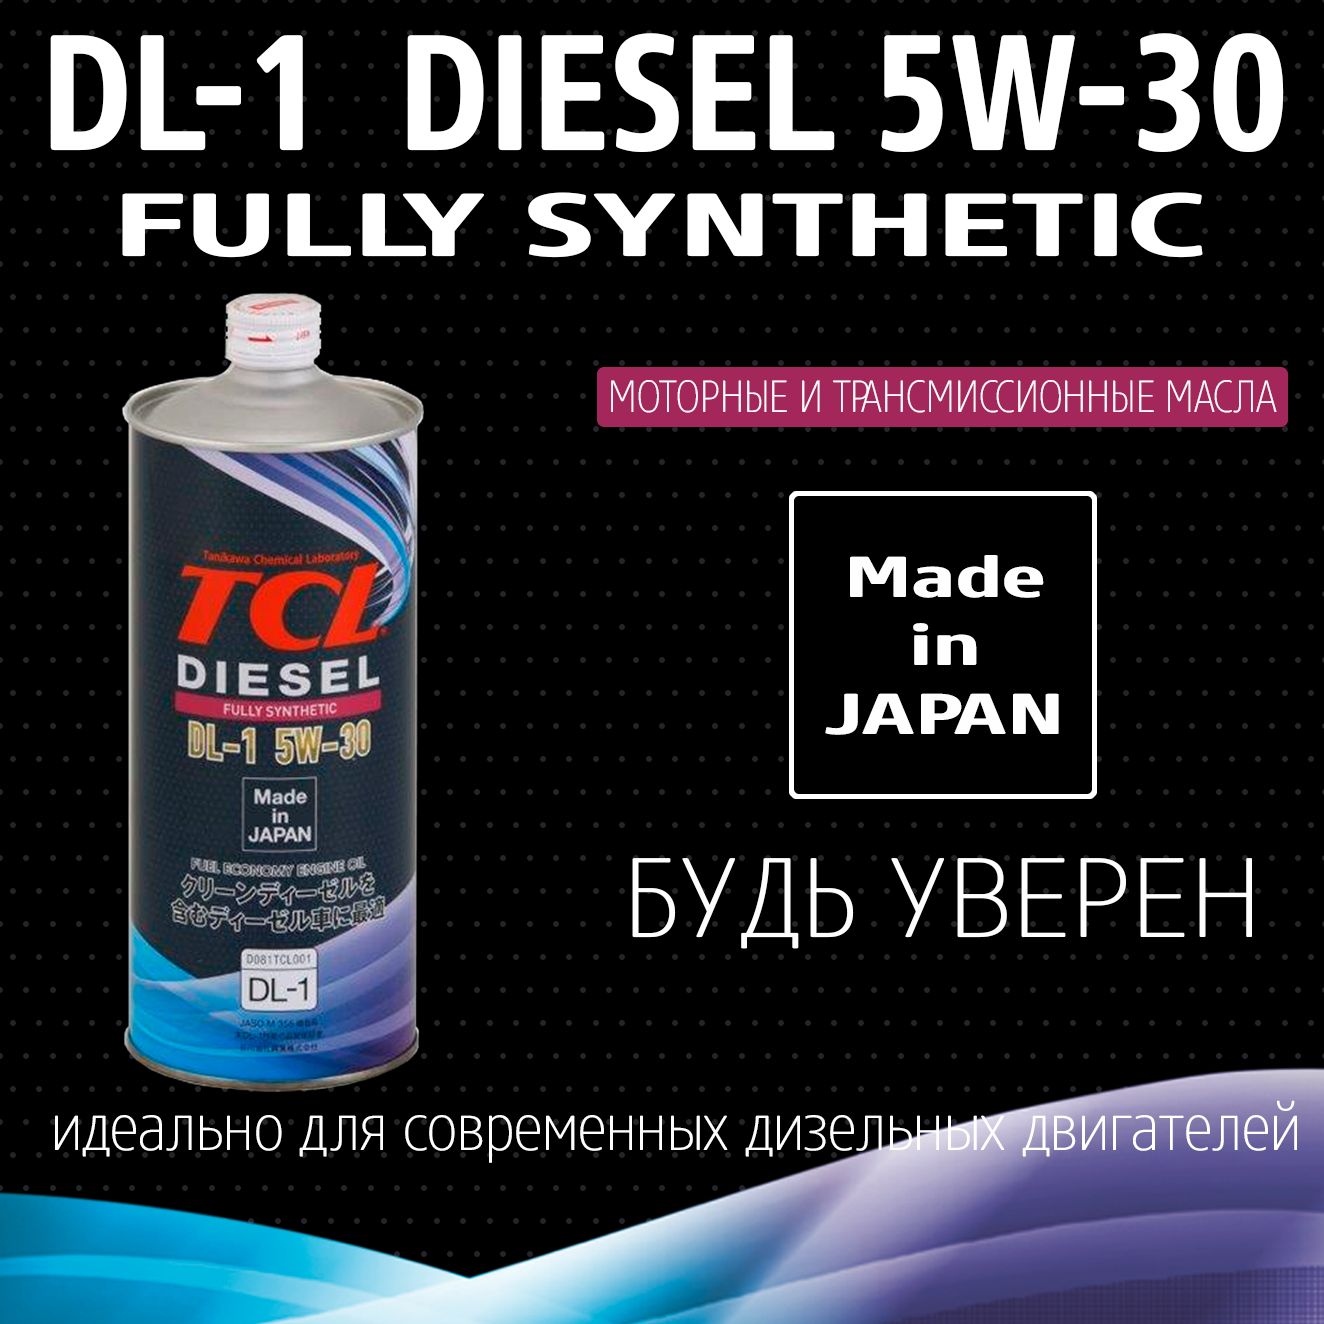 Масло tcl 5w 30. Масло ТСЛ 5в30. TCL масло моторное 5w-30. Масло для дизельных двигателей TCL Diesel, fully Synth, DL-1, 5w30, 1л. Моторное масло TCL 5w-30 DL-1.